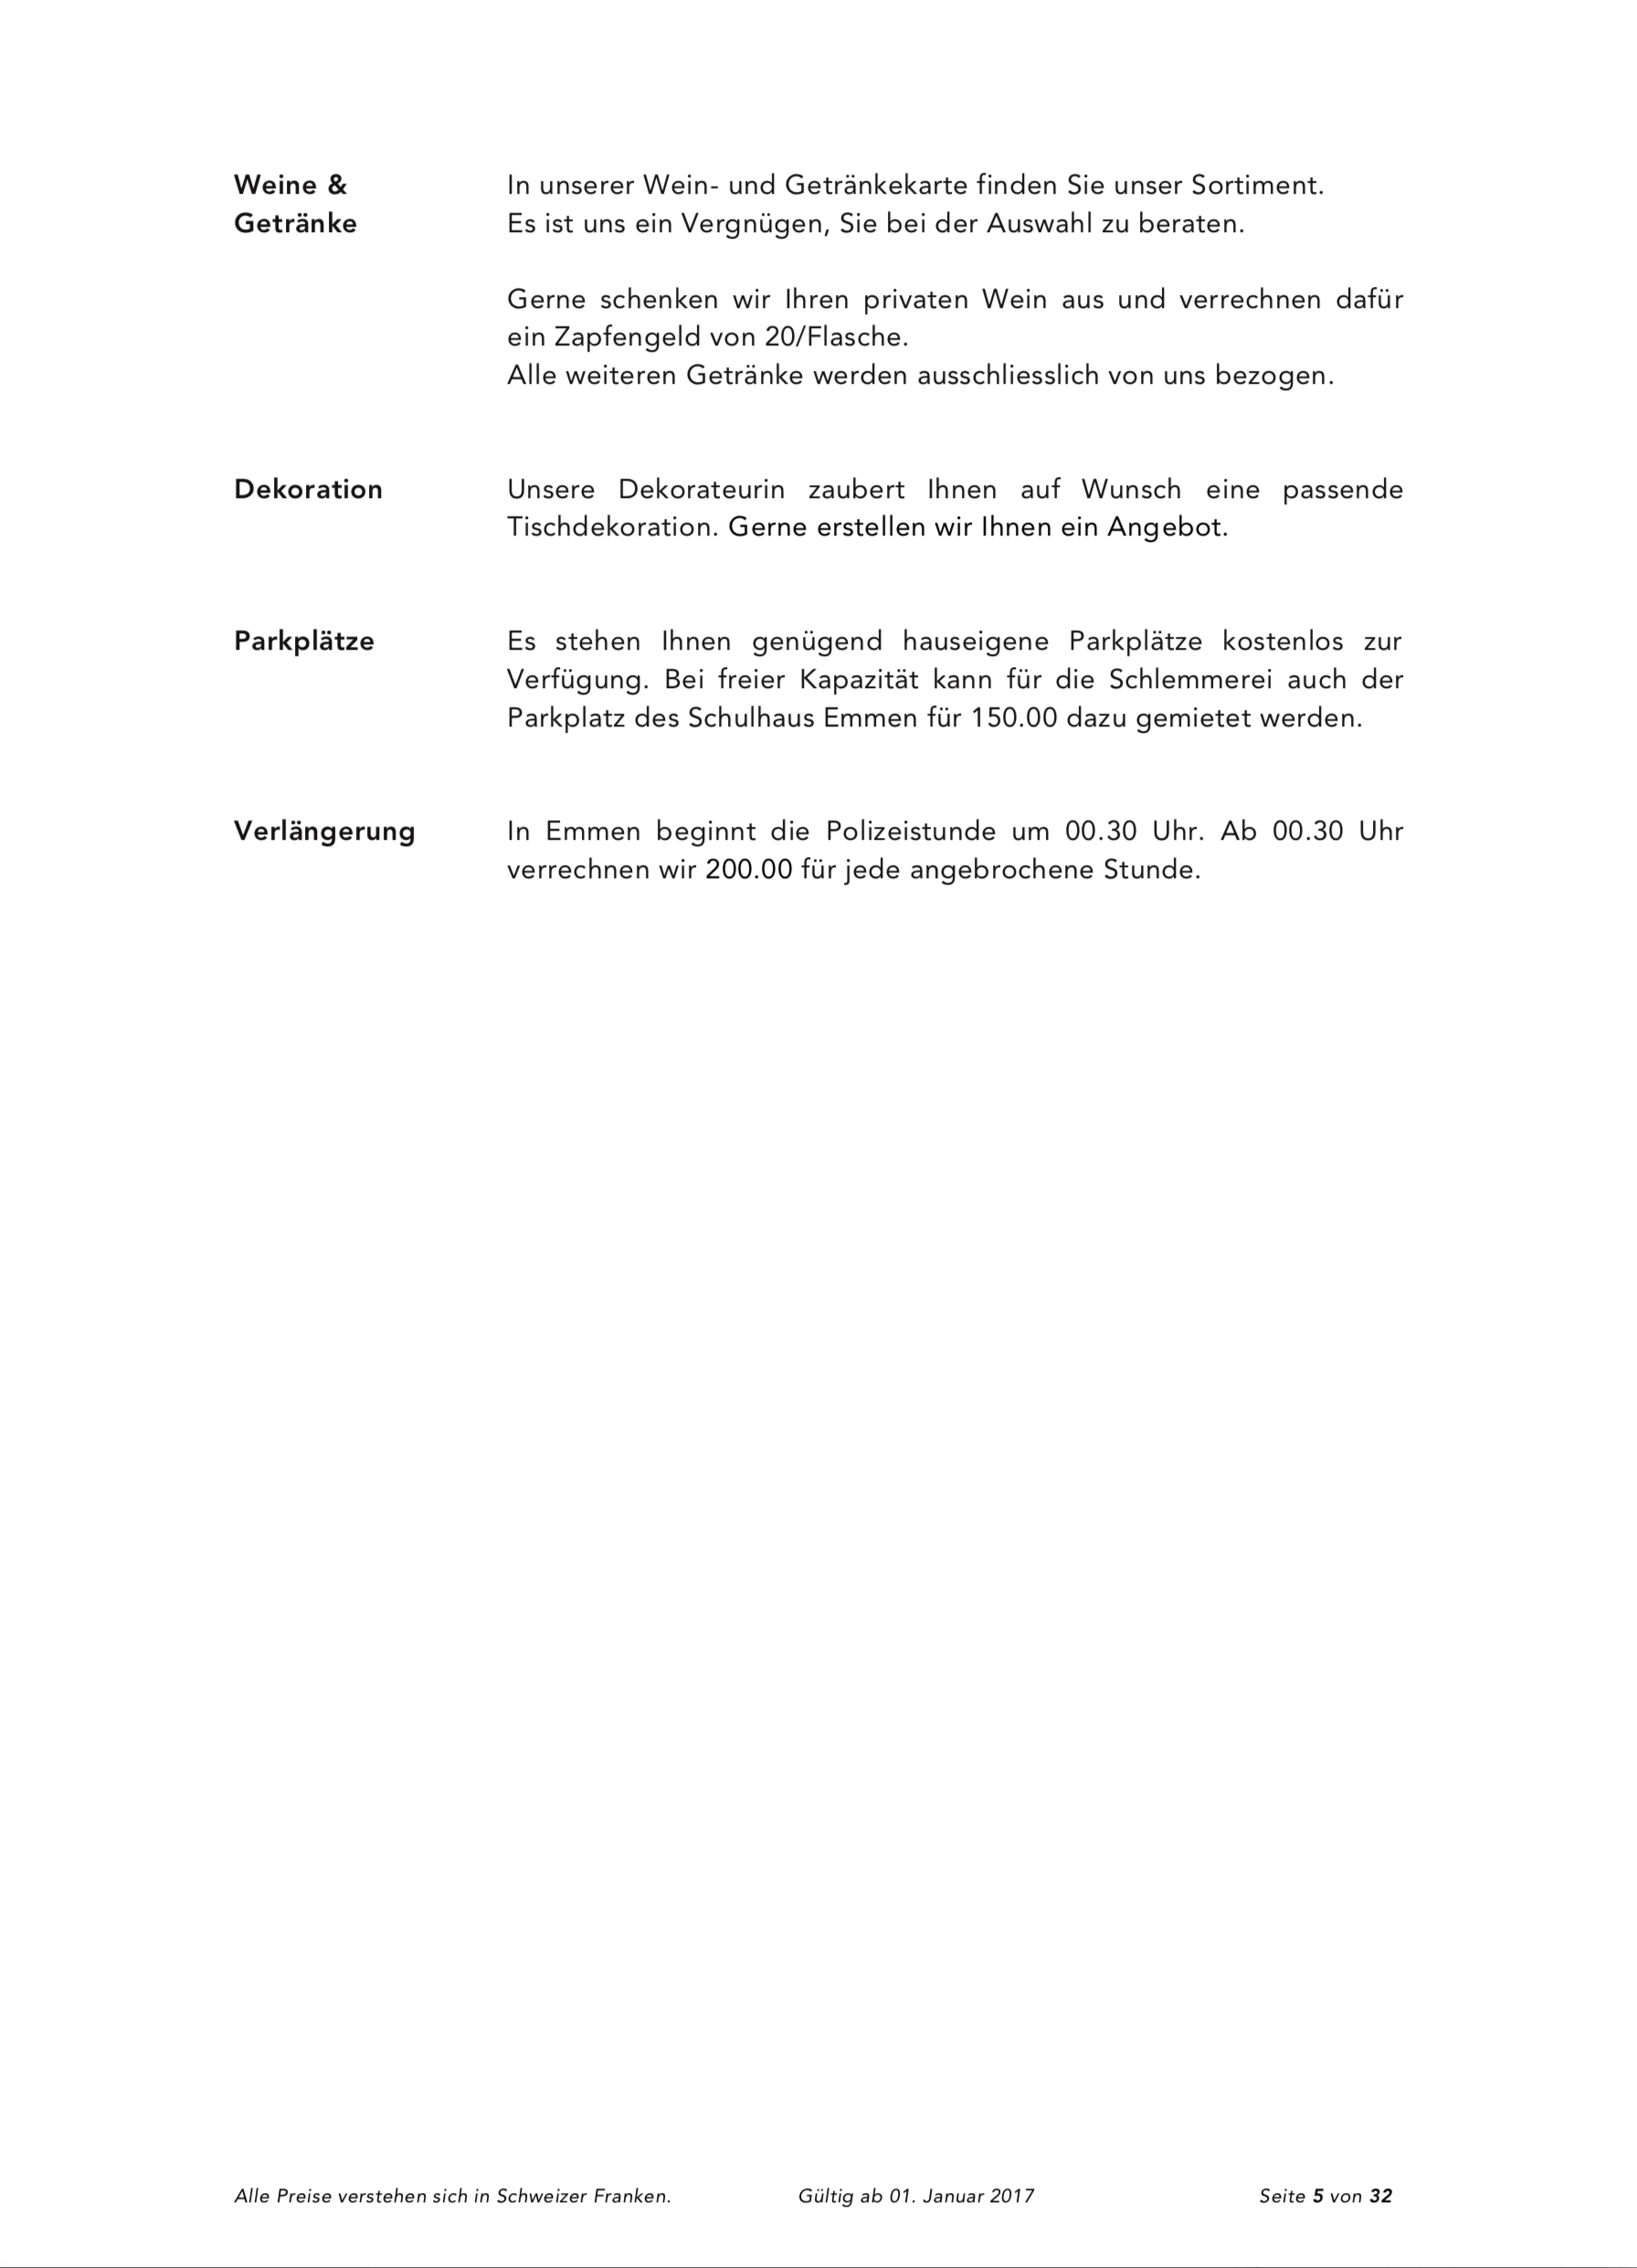 bankettdokumentation-schlemmerei-partnersingmbh-1.jpg